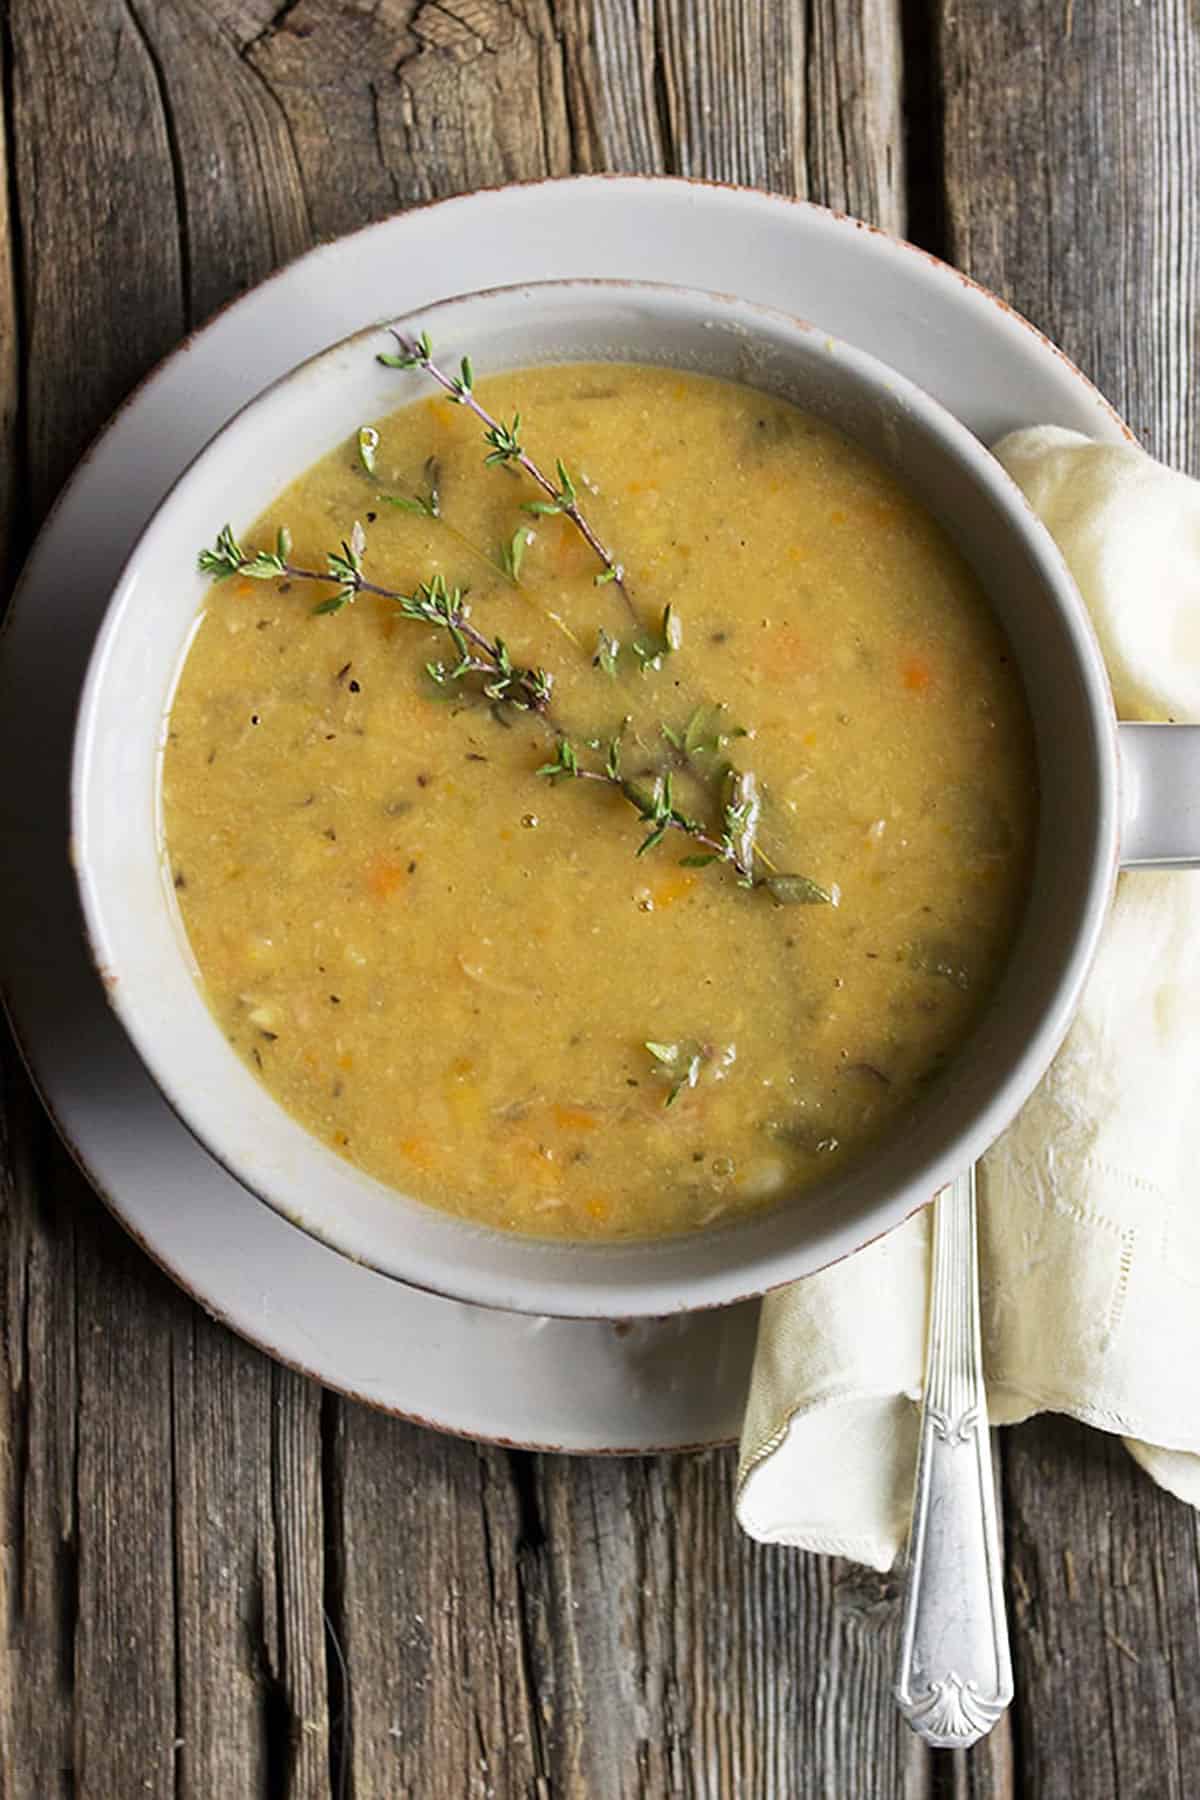 Quebec split pea soup in bowl